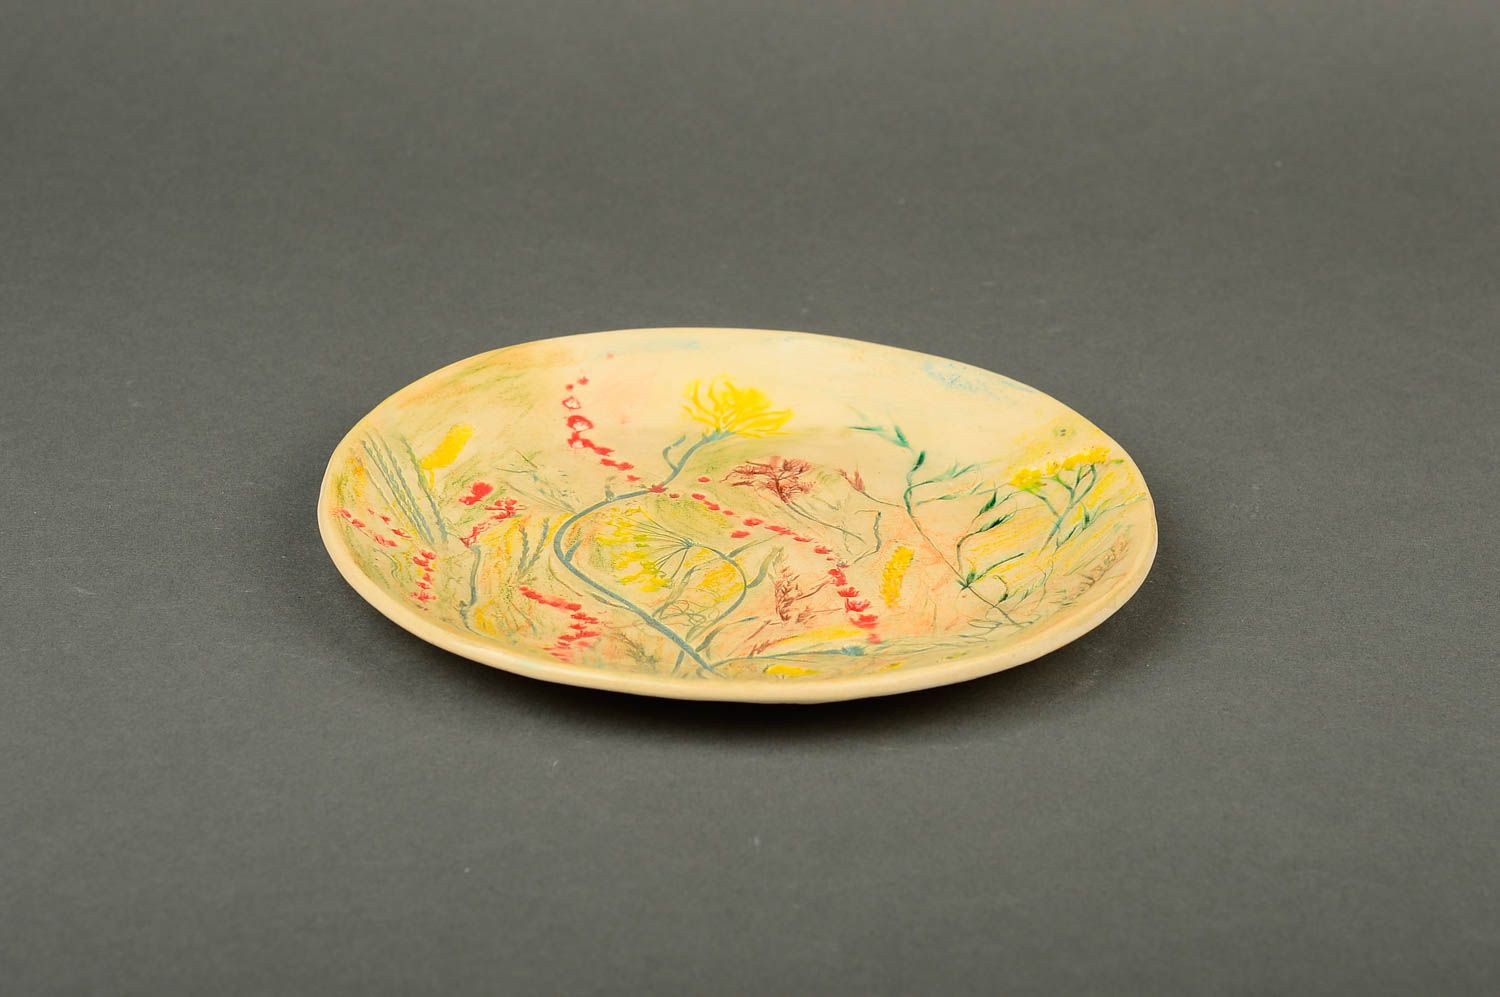 Beautiful handmade ceramic plate table decor ideas ceramic kitchenware ideas photo 3